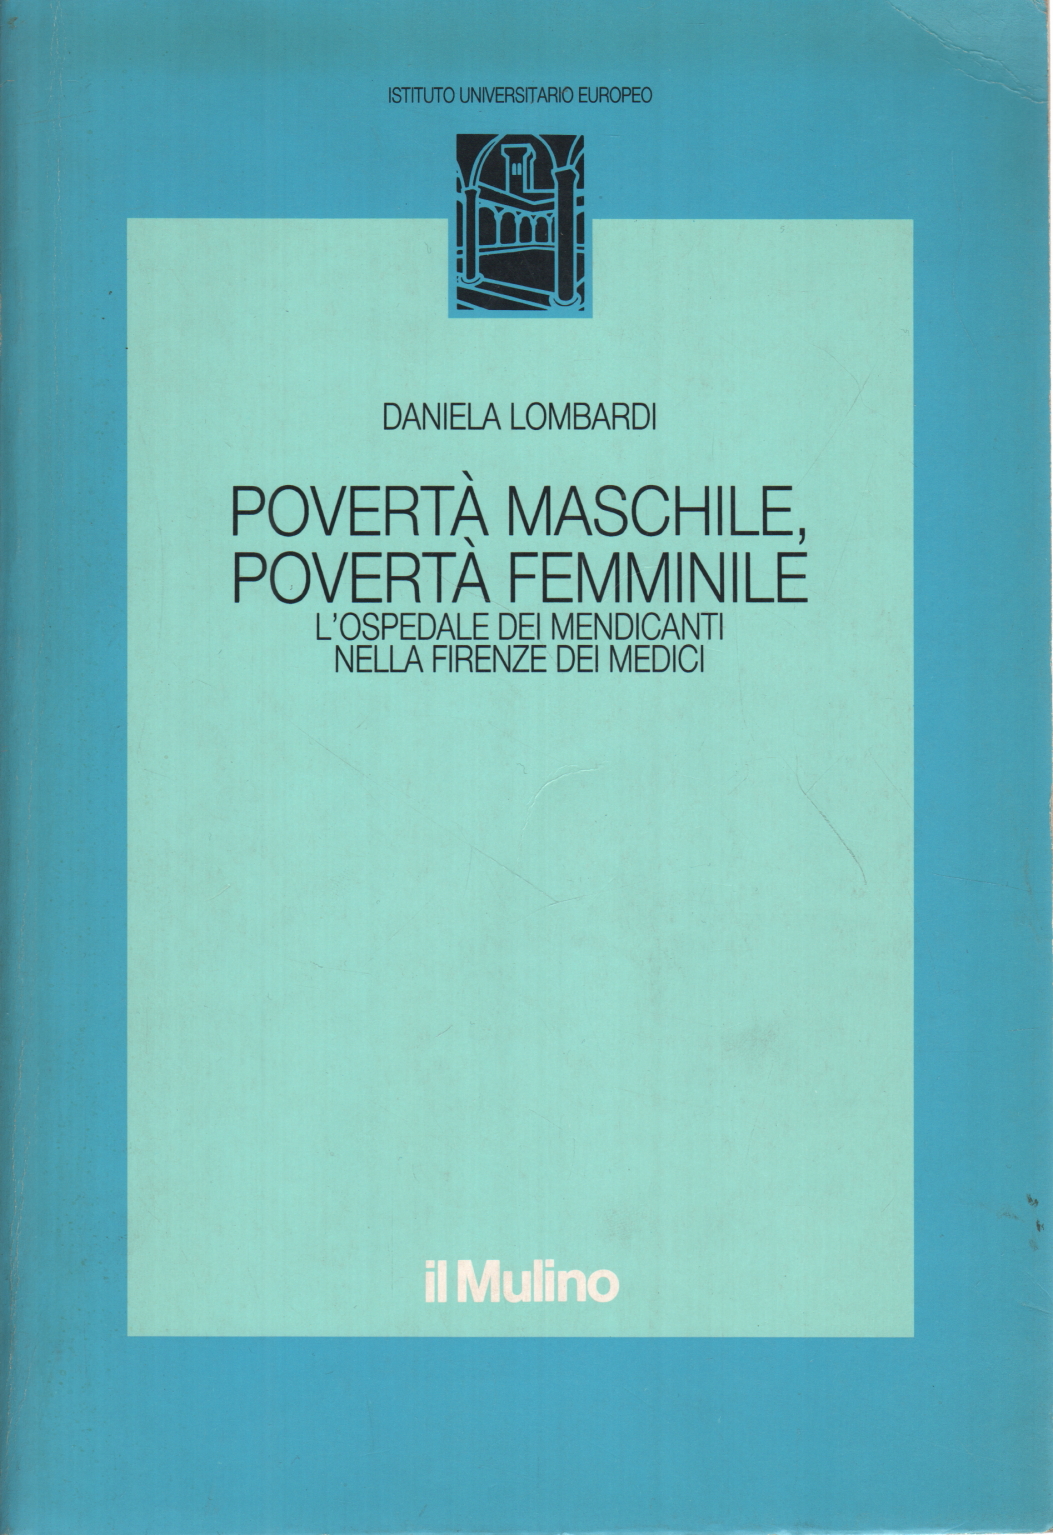 Poverty male female poverty, Daniela Lombardi